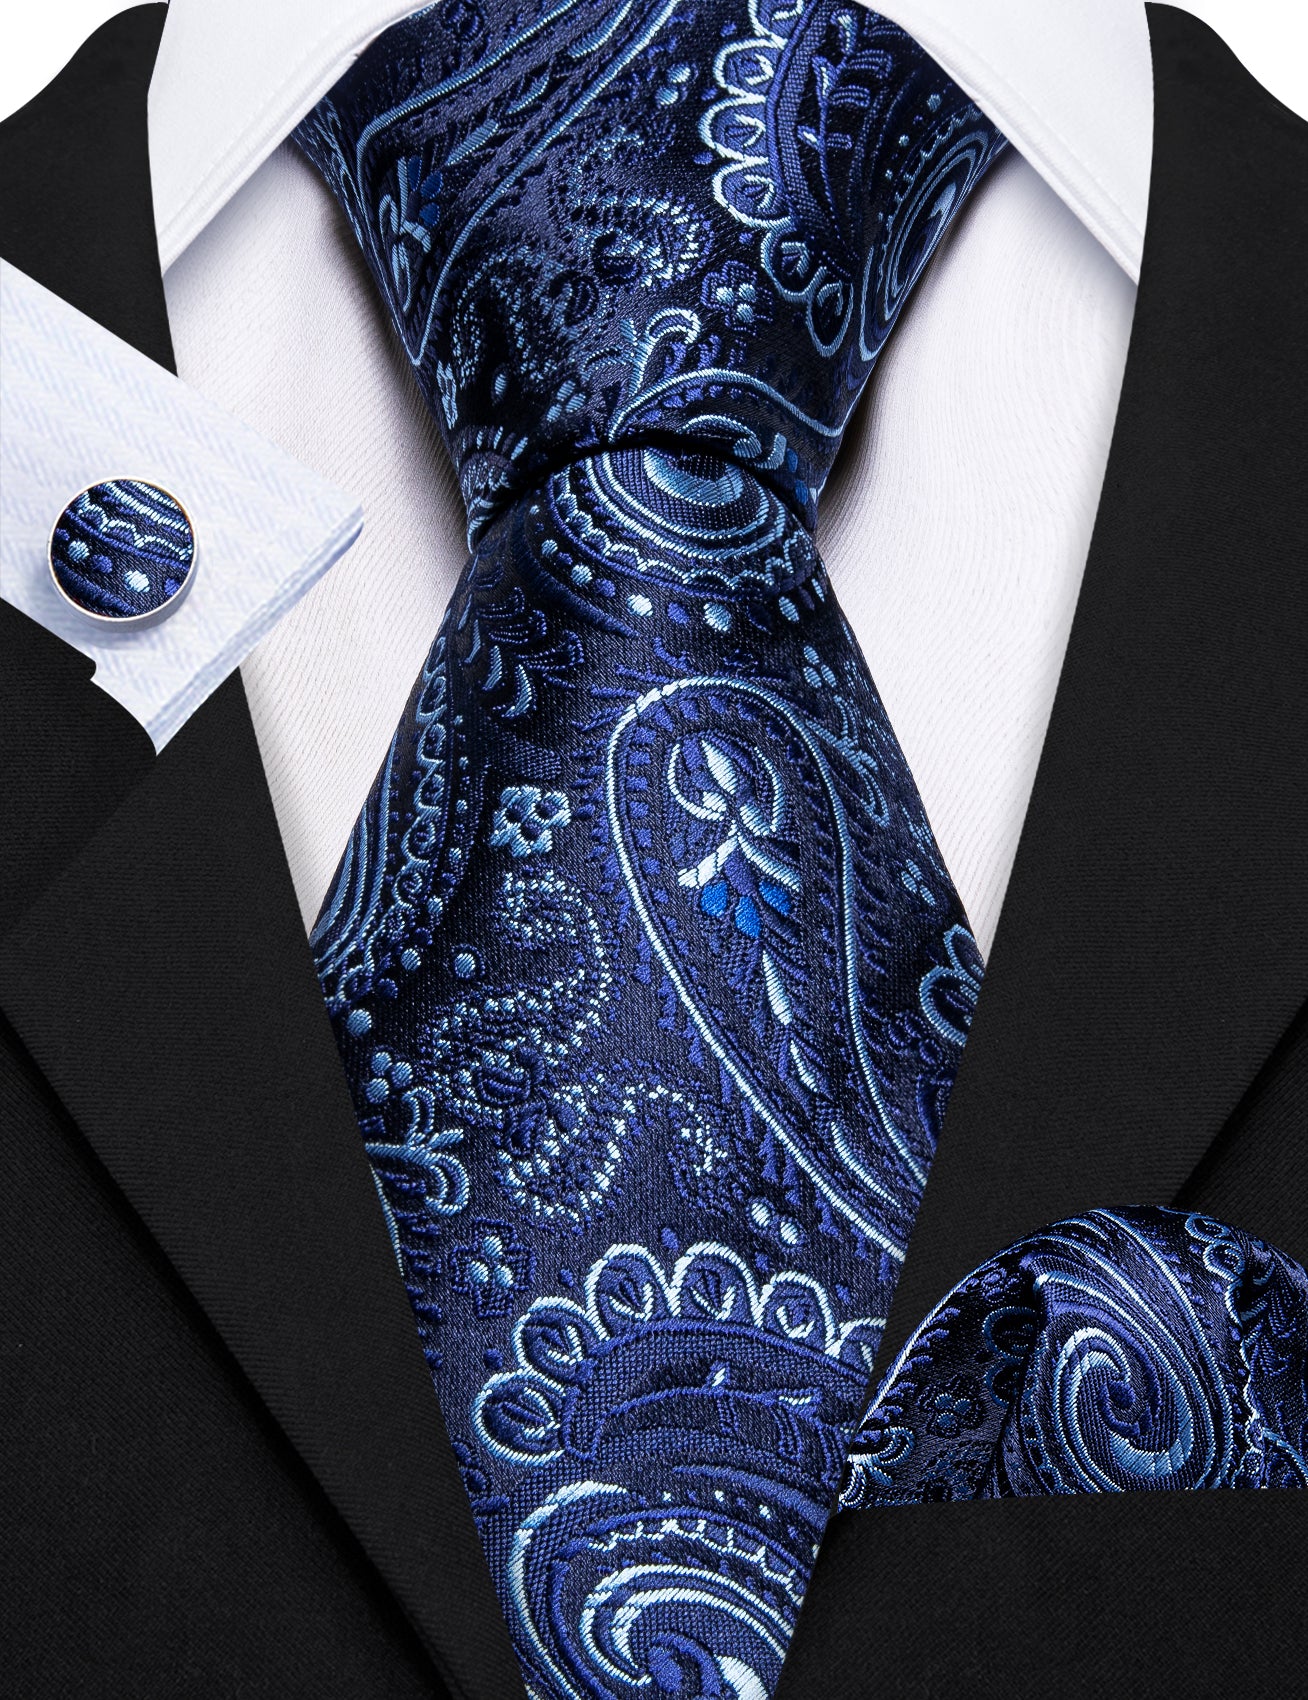 Blue White Paisley Silk Tie Pocket Square Cufflinks Set